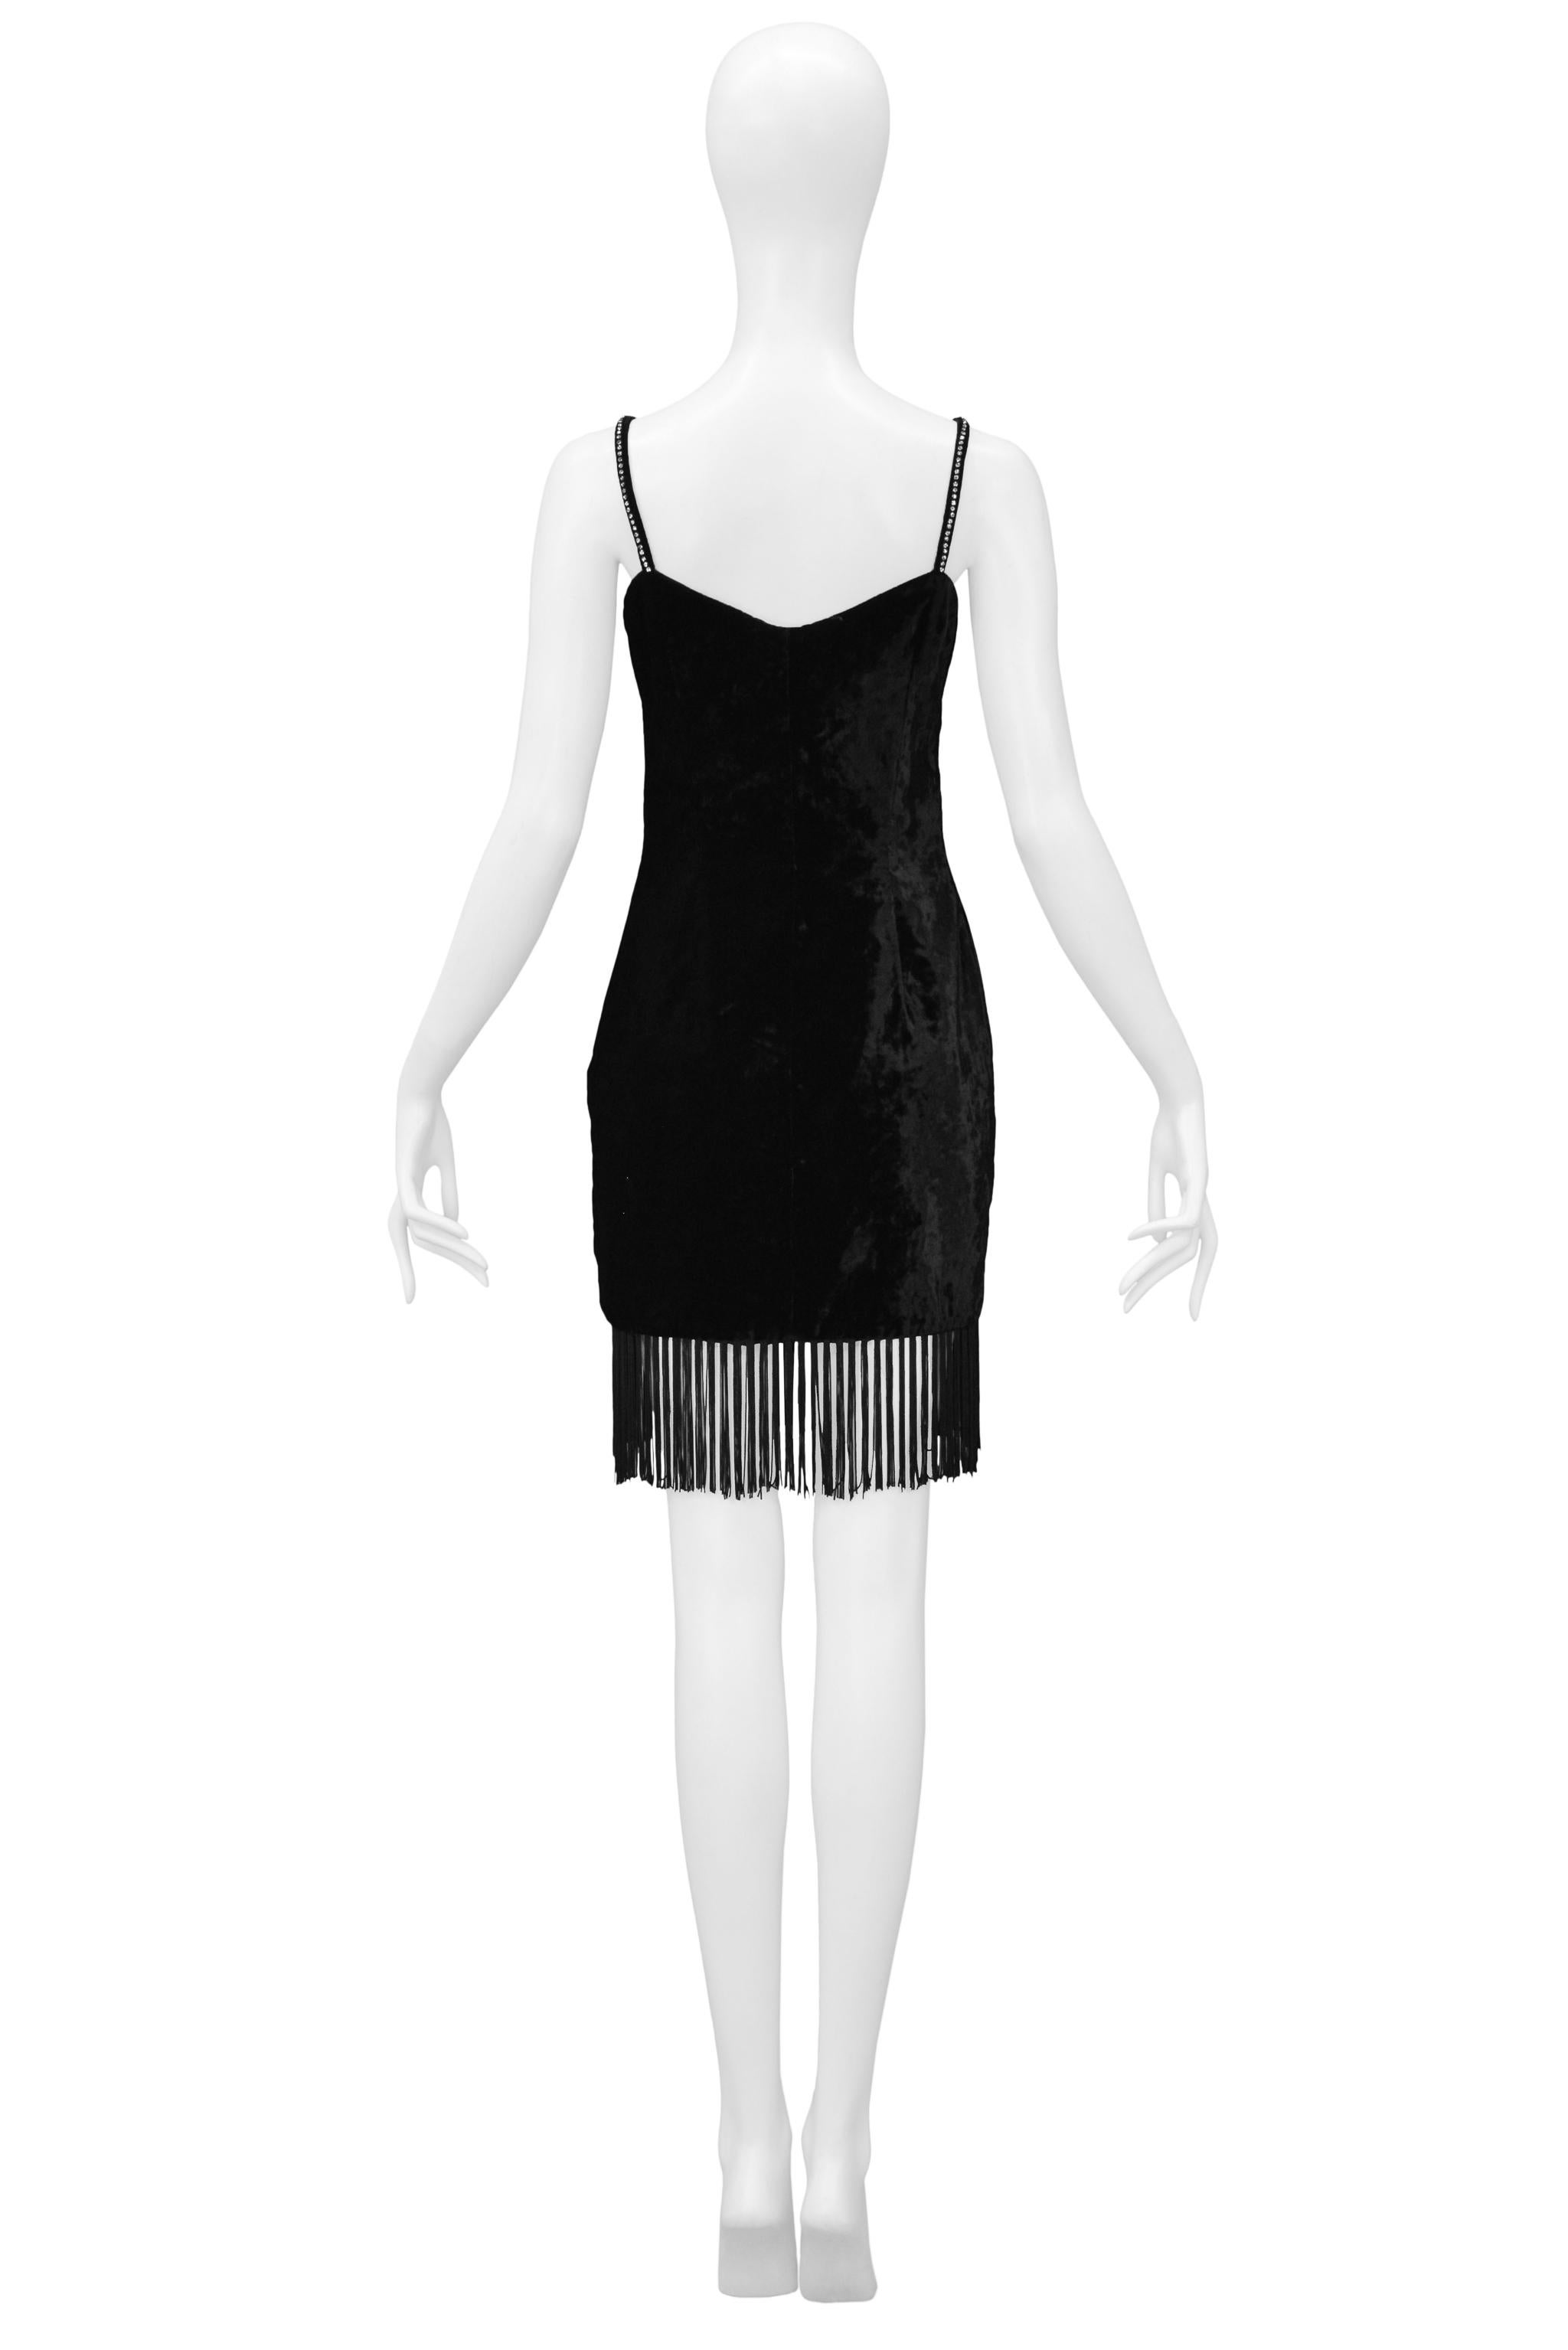 Dolce & Gabbana Black Velvet Mini Dress With Fringe Hem & Rhinestone Straps For Sale 1